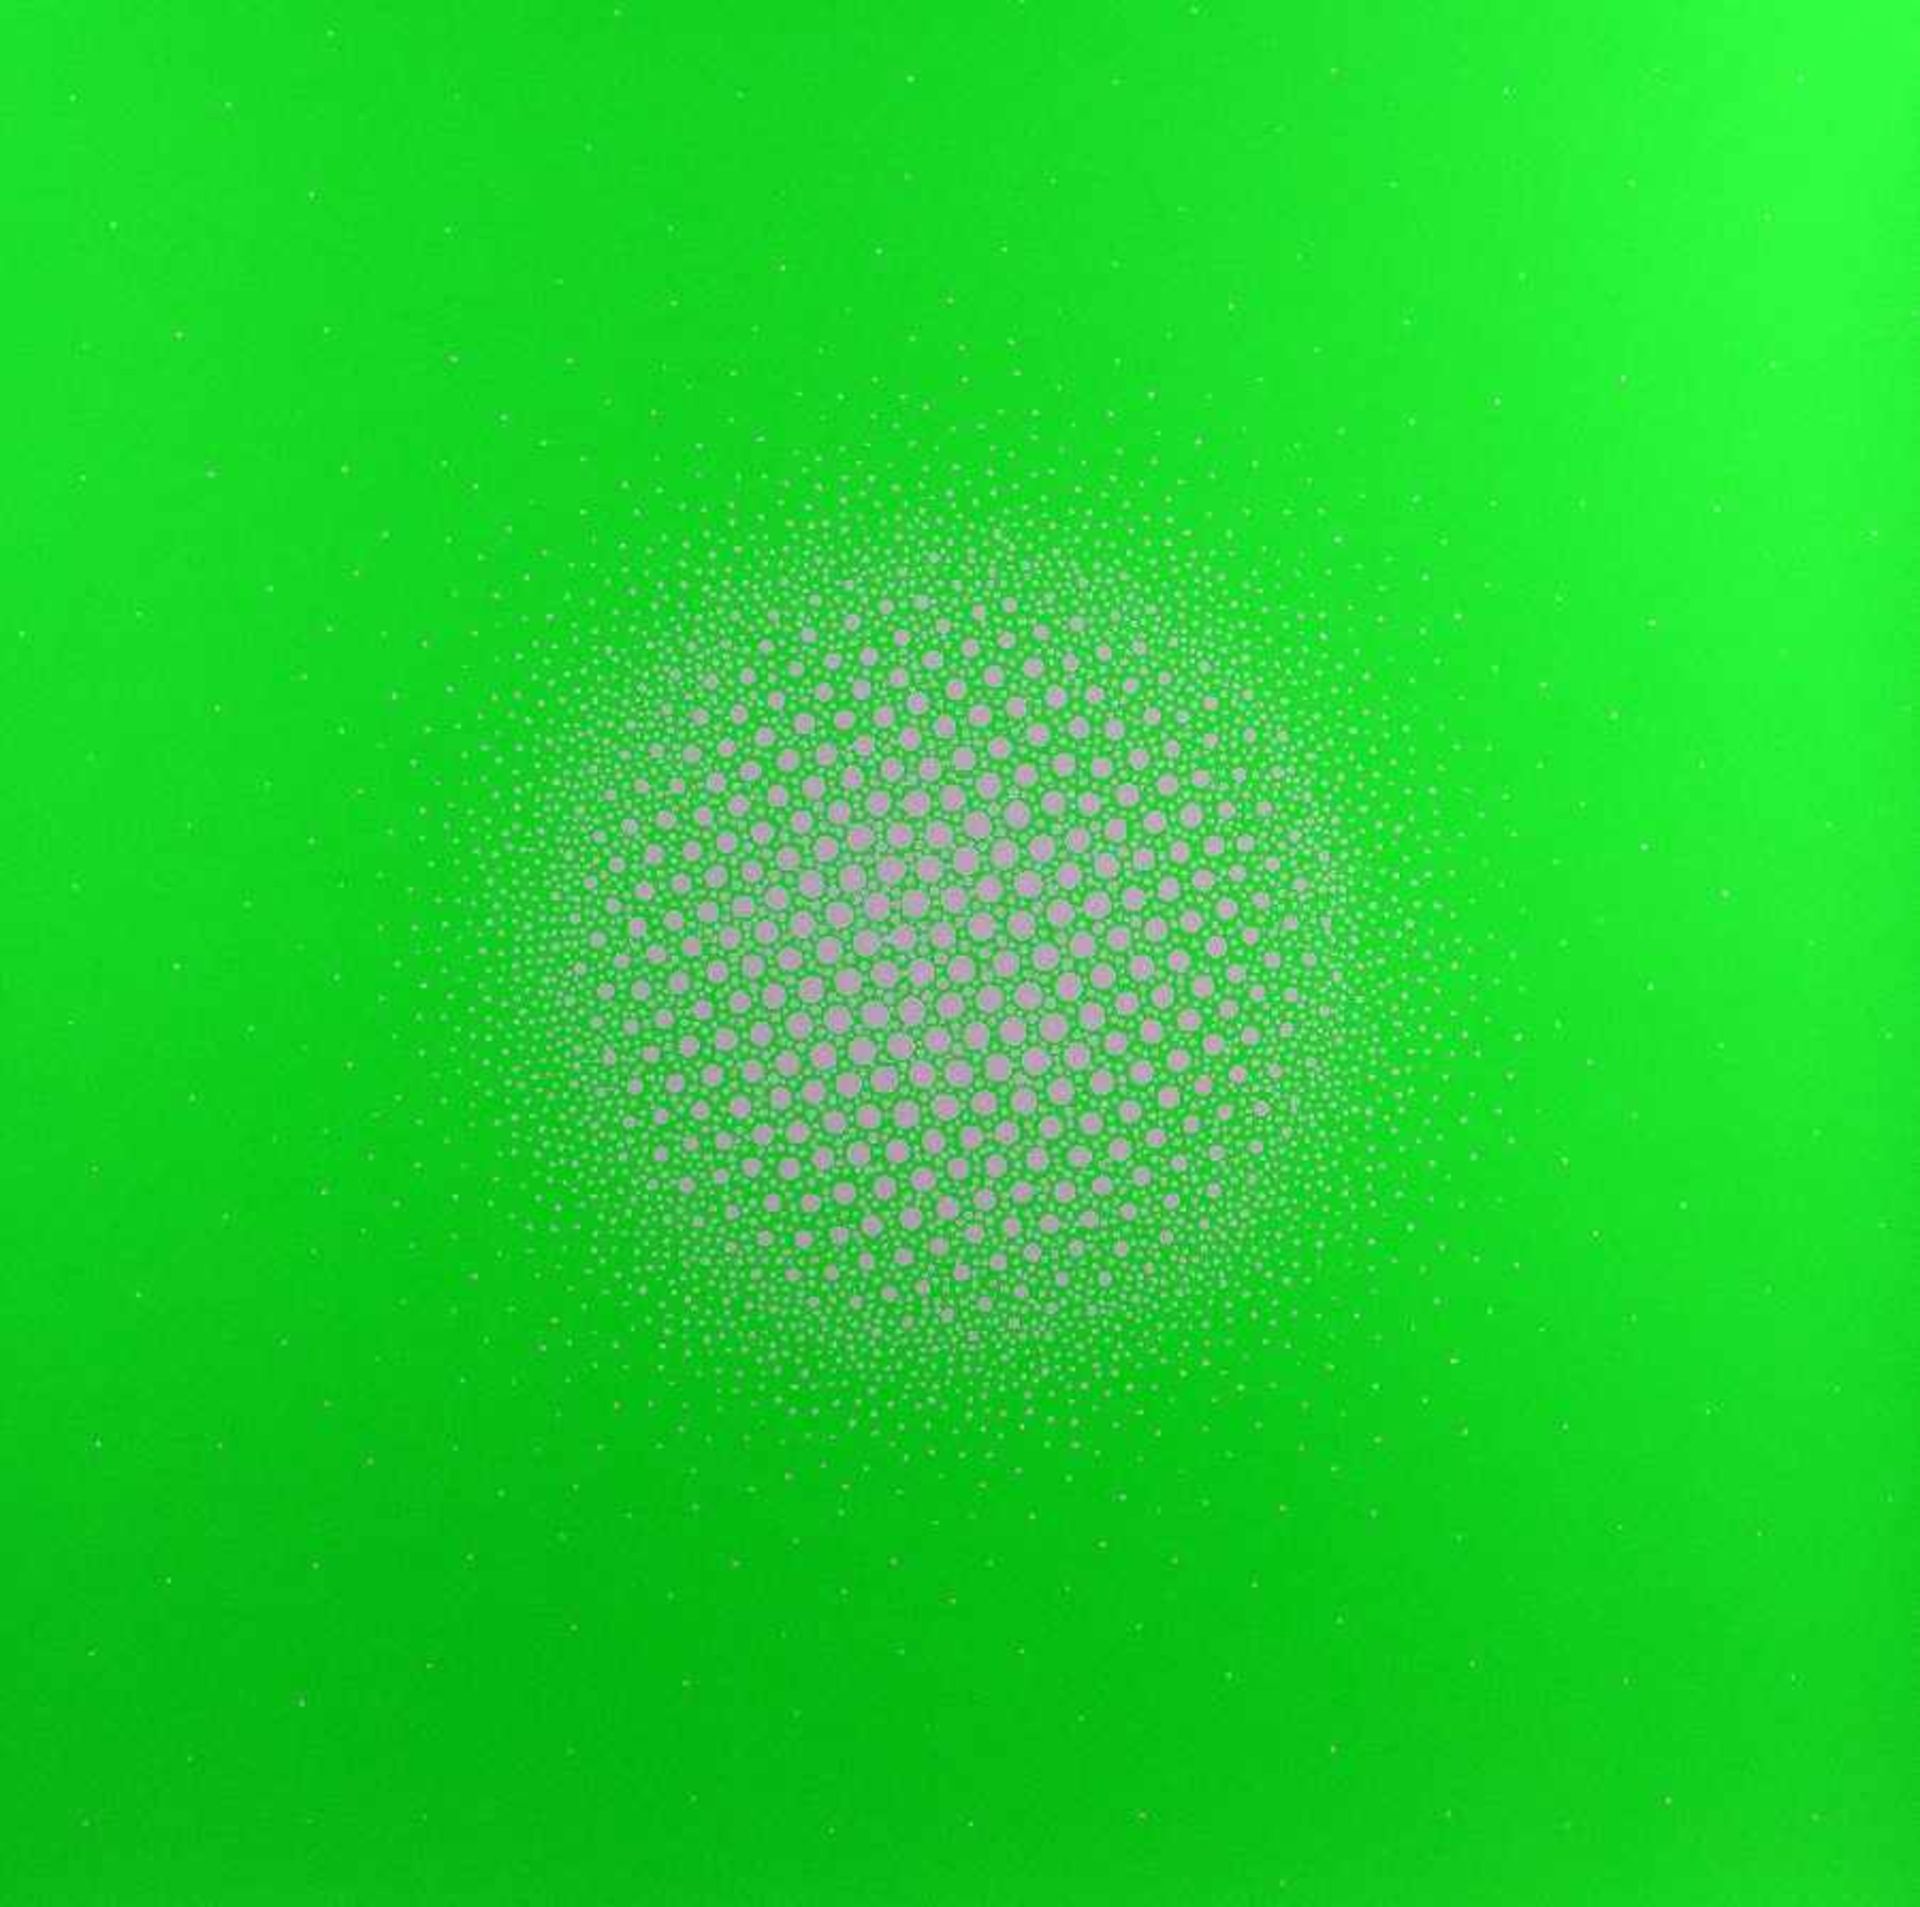 Kuno Gonschior1935 Wanne-Eickel - 2010 BochumComposition on a green backgroundSilkscreen on strong